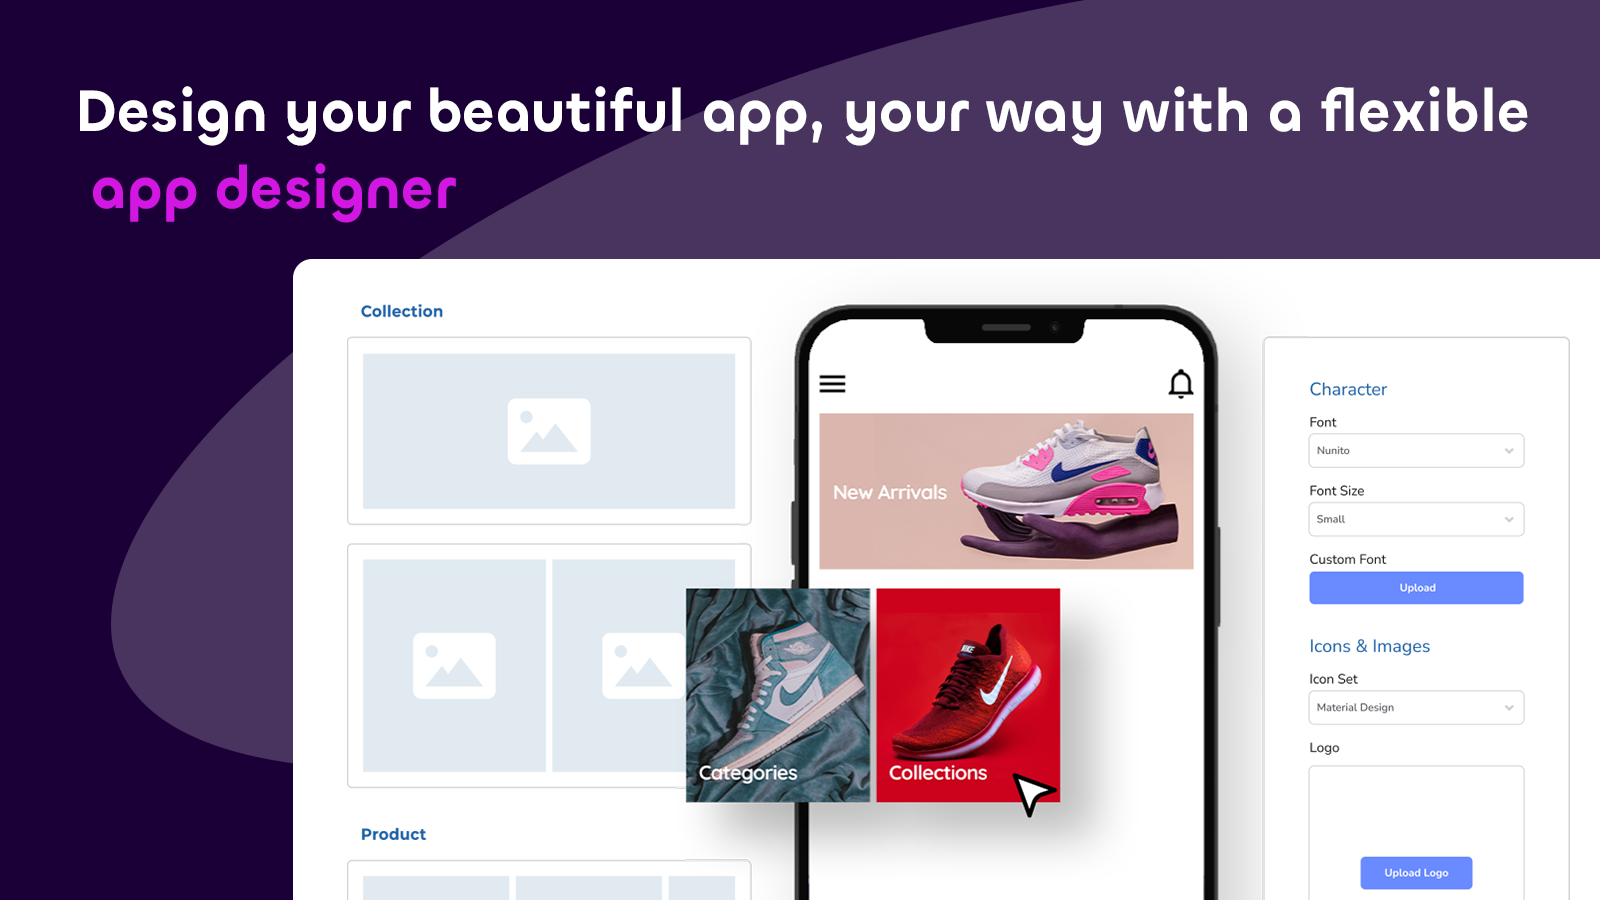 Design your beautiful app